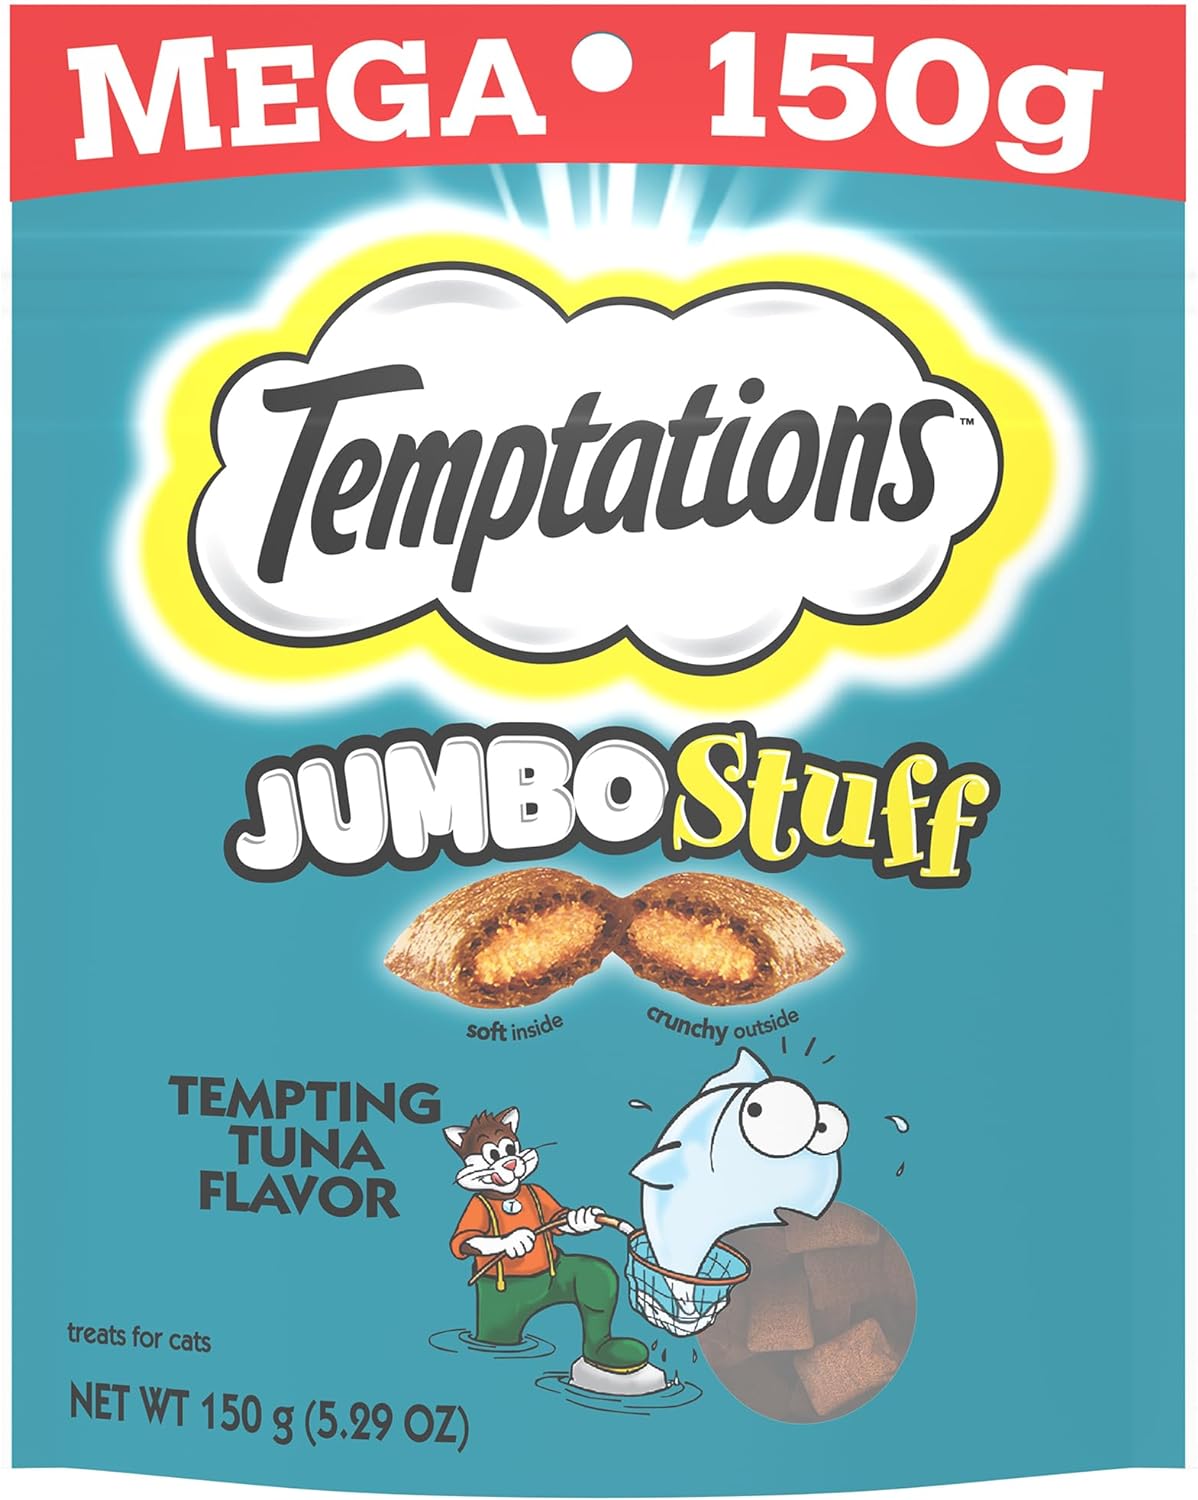 Temptations Jumbo Stuff Crunchy and Soft Cat Treats Tempting Tuna Flavor, (10) 5.3 oz. Pouches